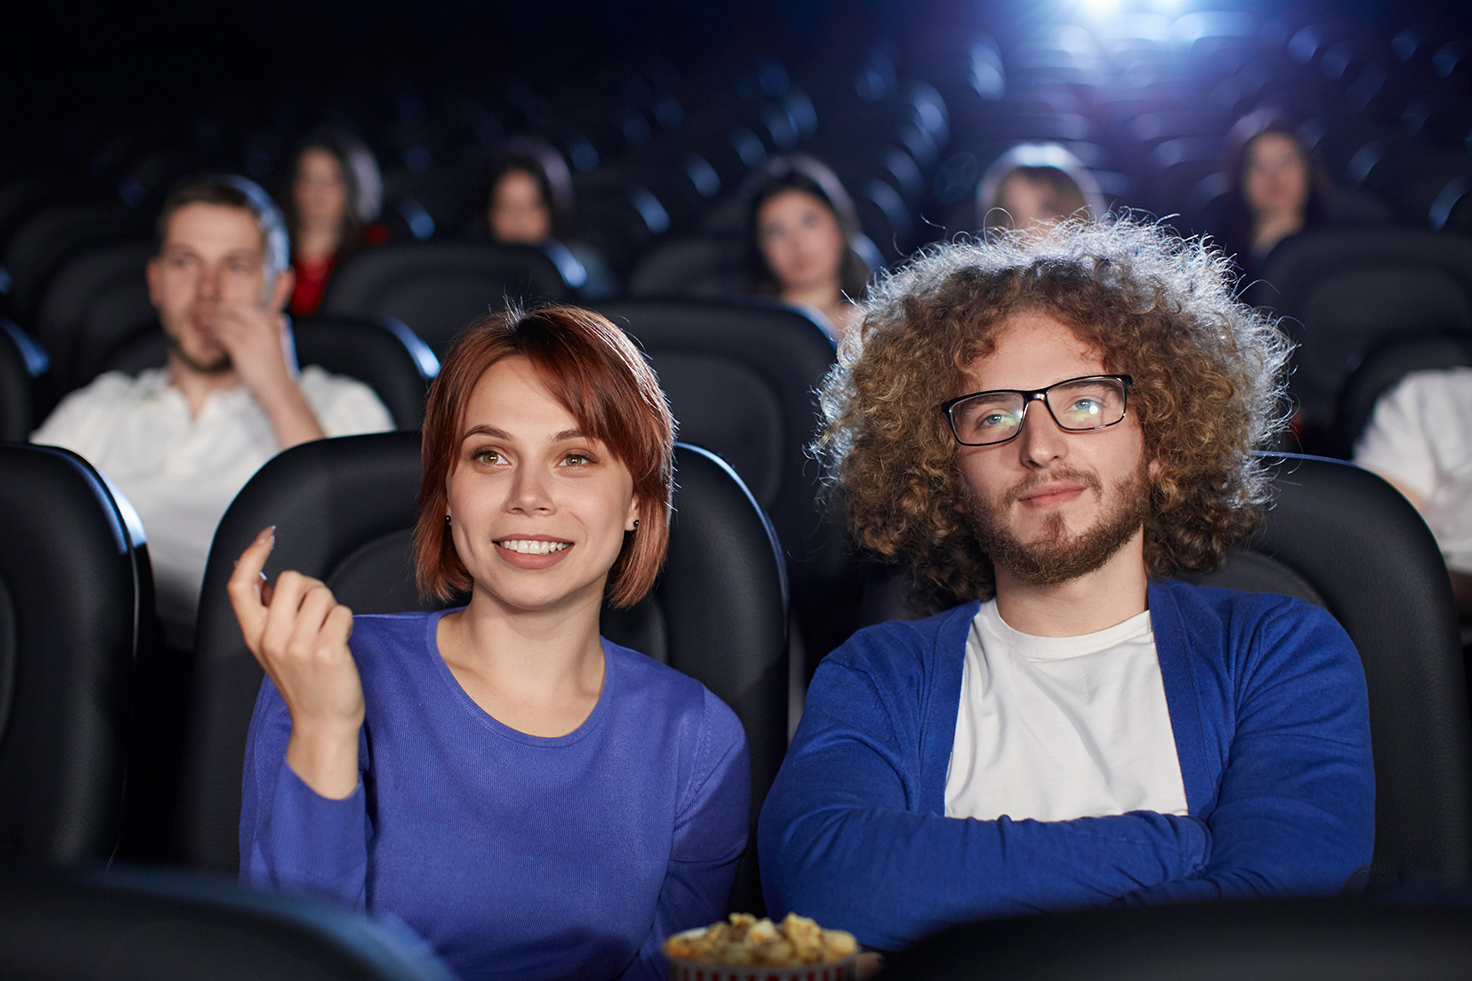 couple-enjoying-date-in-movie-theater-2021-08-30-09-47-00-utc